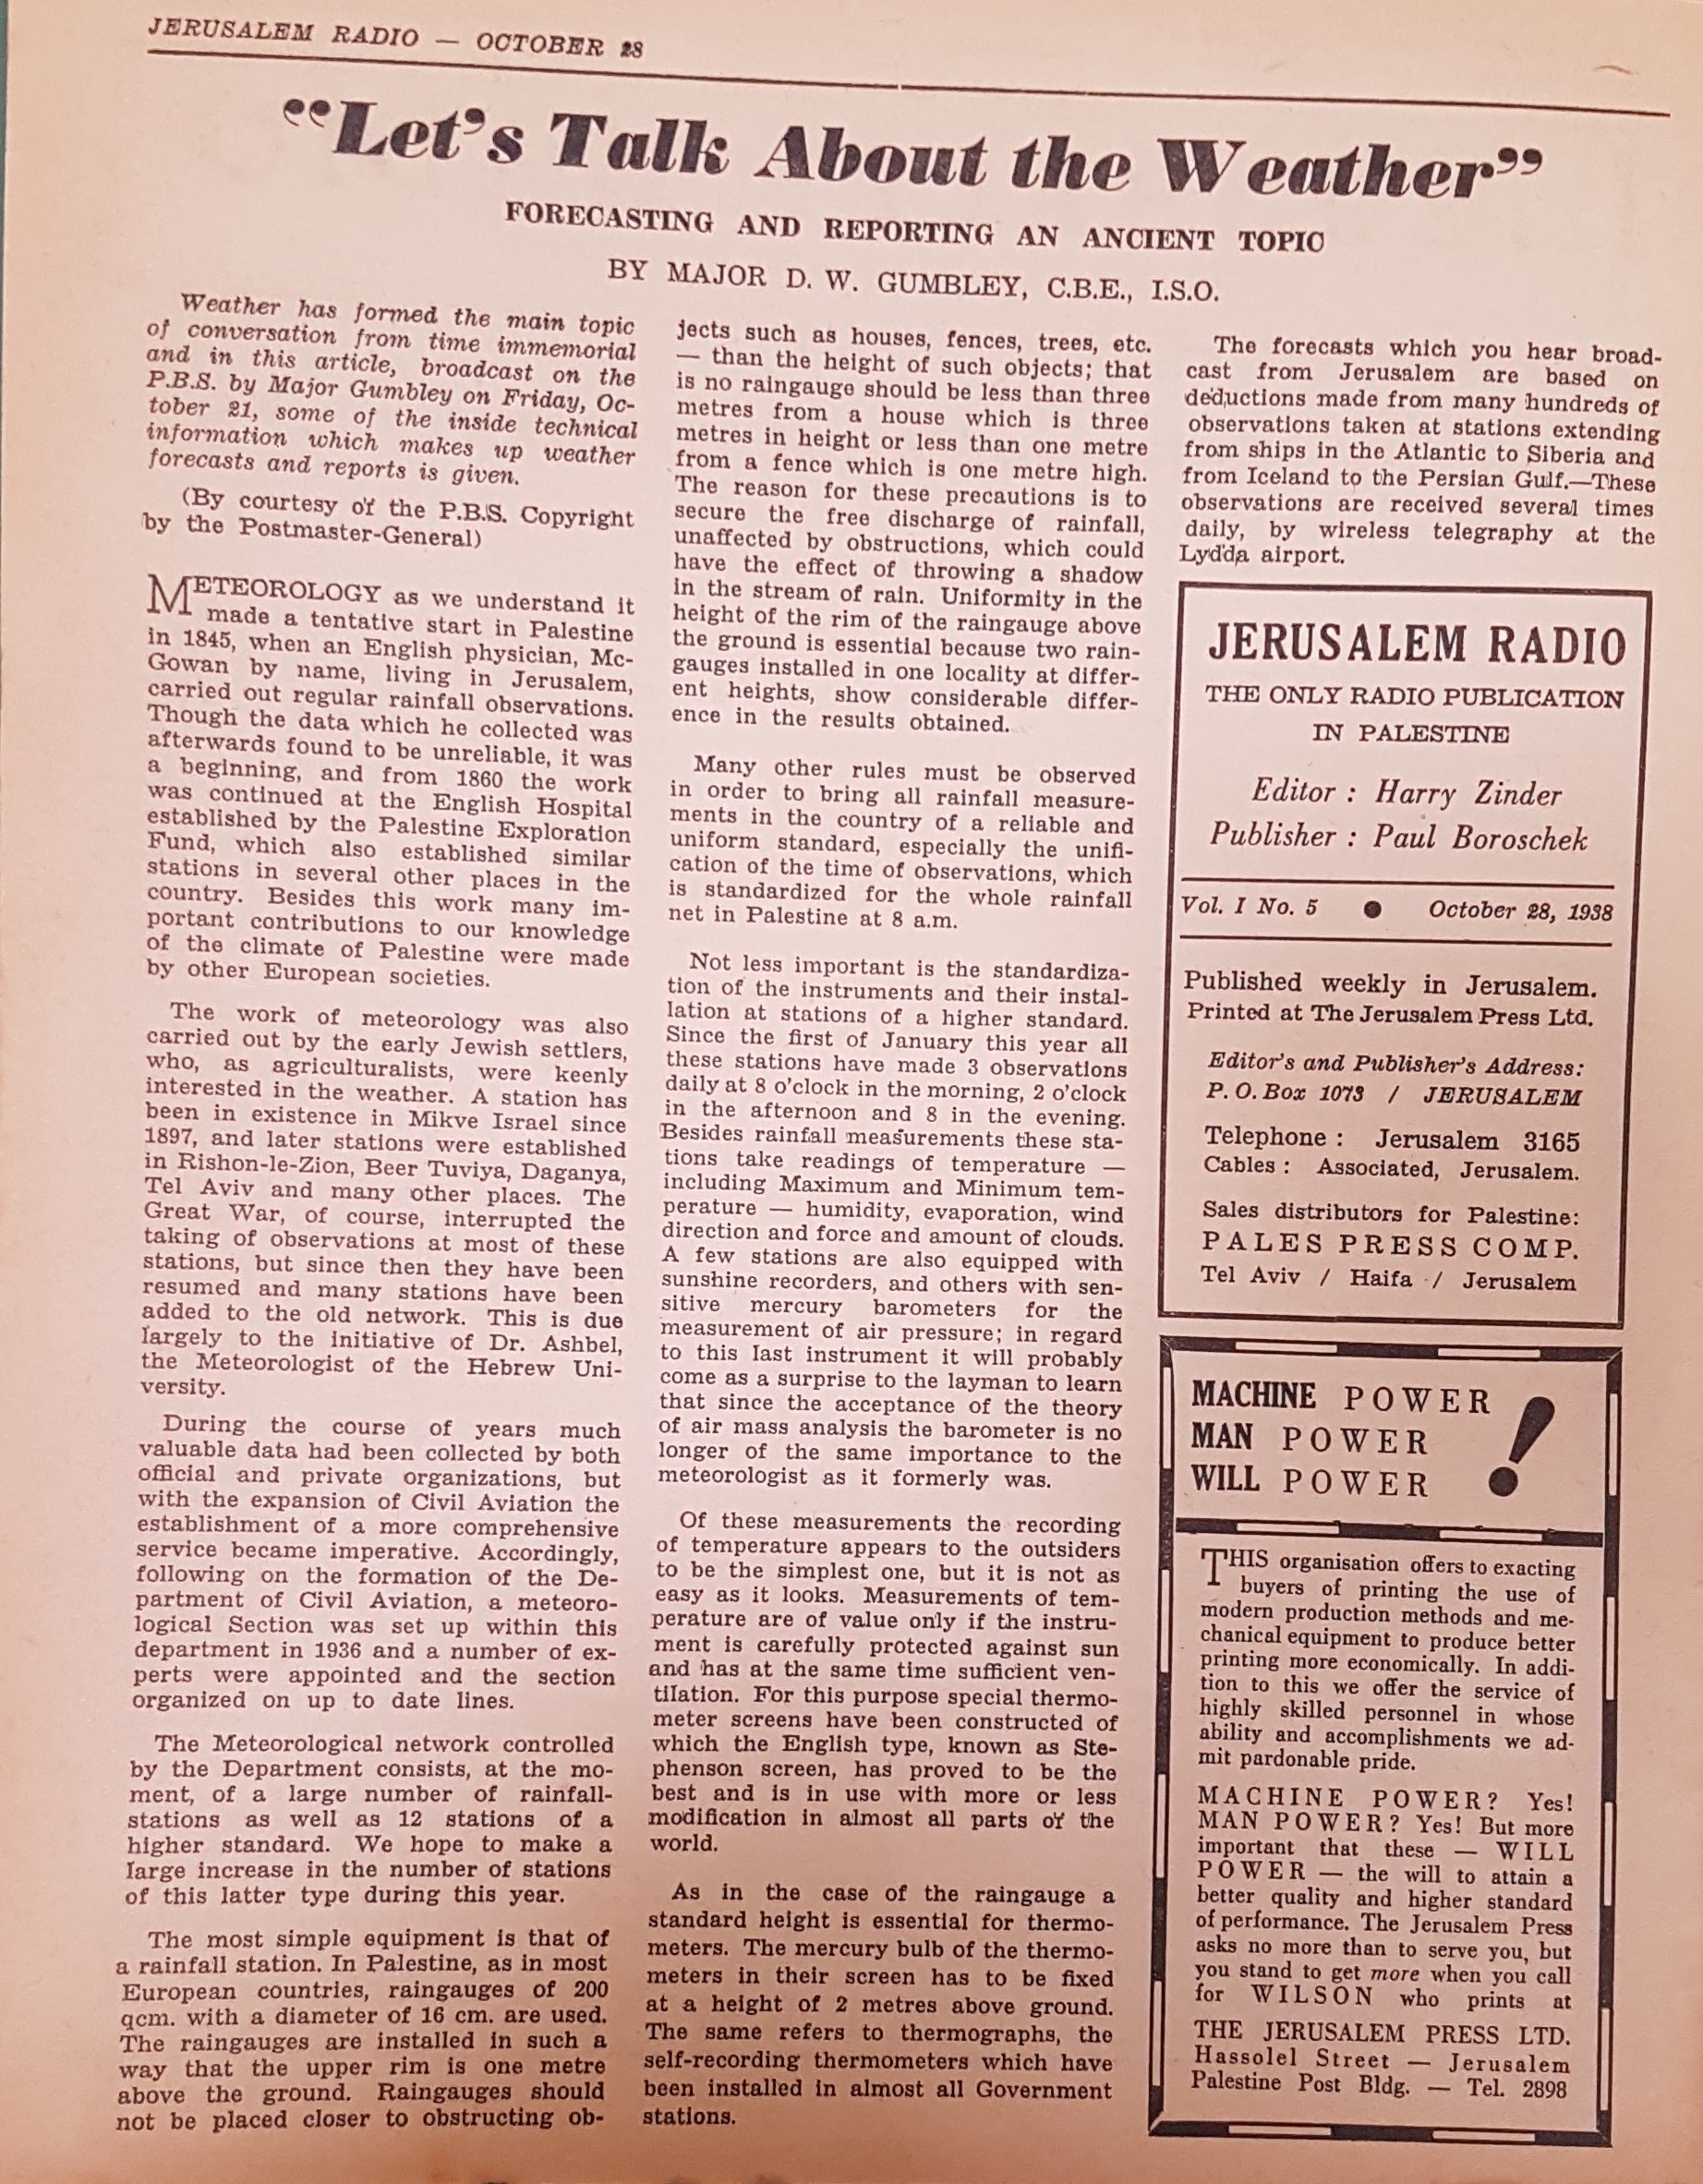 Jerusalem Radio, Volume 1, No. 5, October 28, 1938, page 2